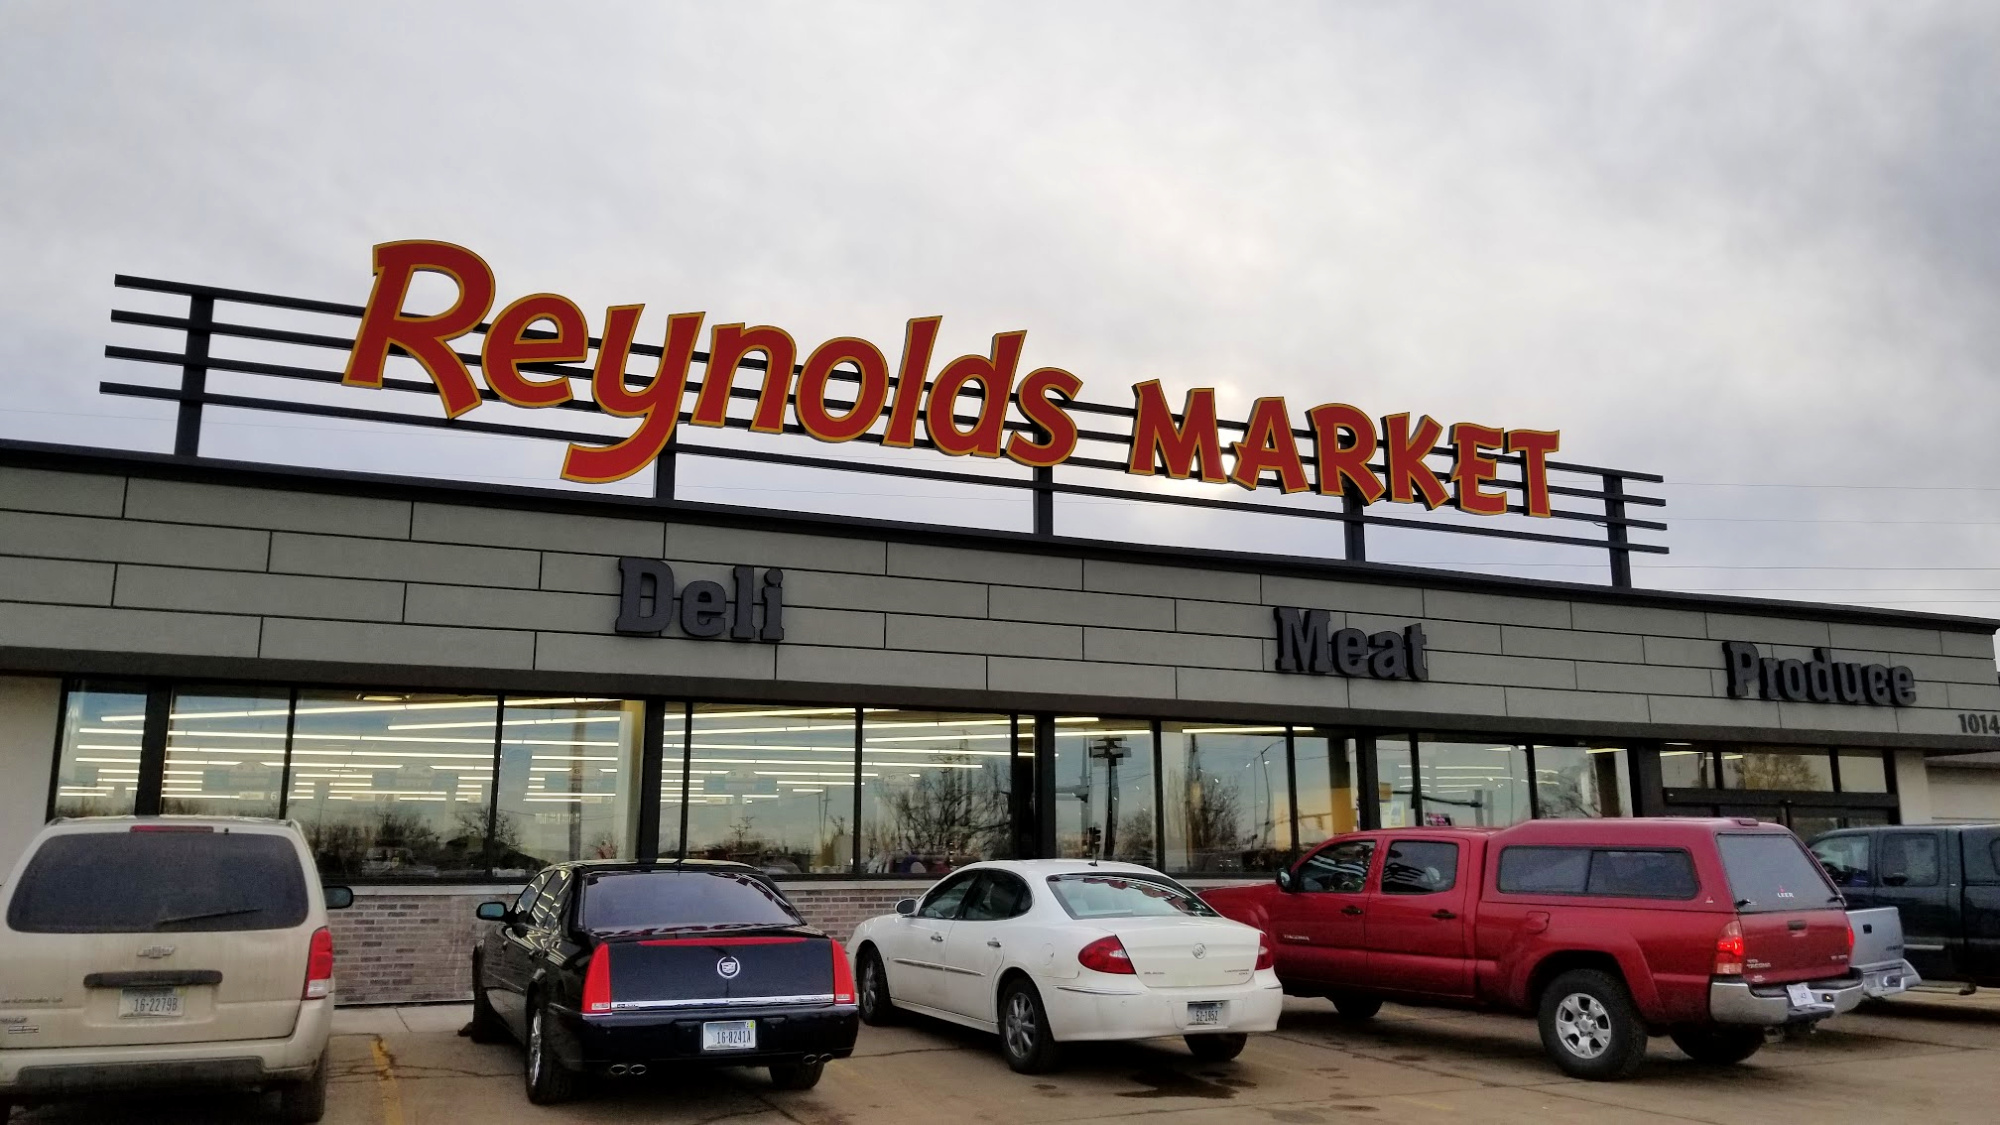 Reynolds Market